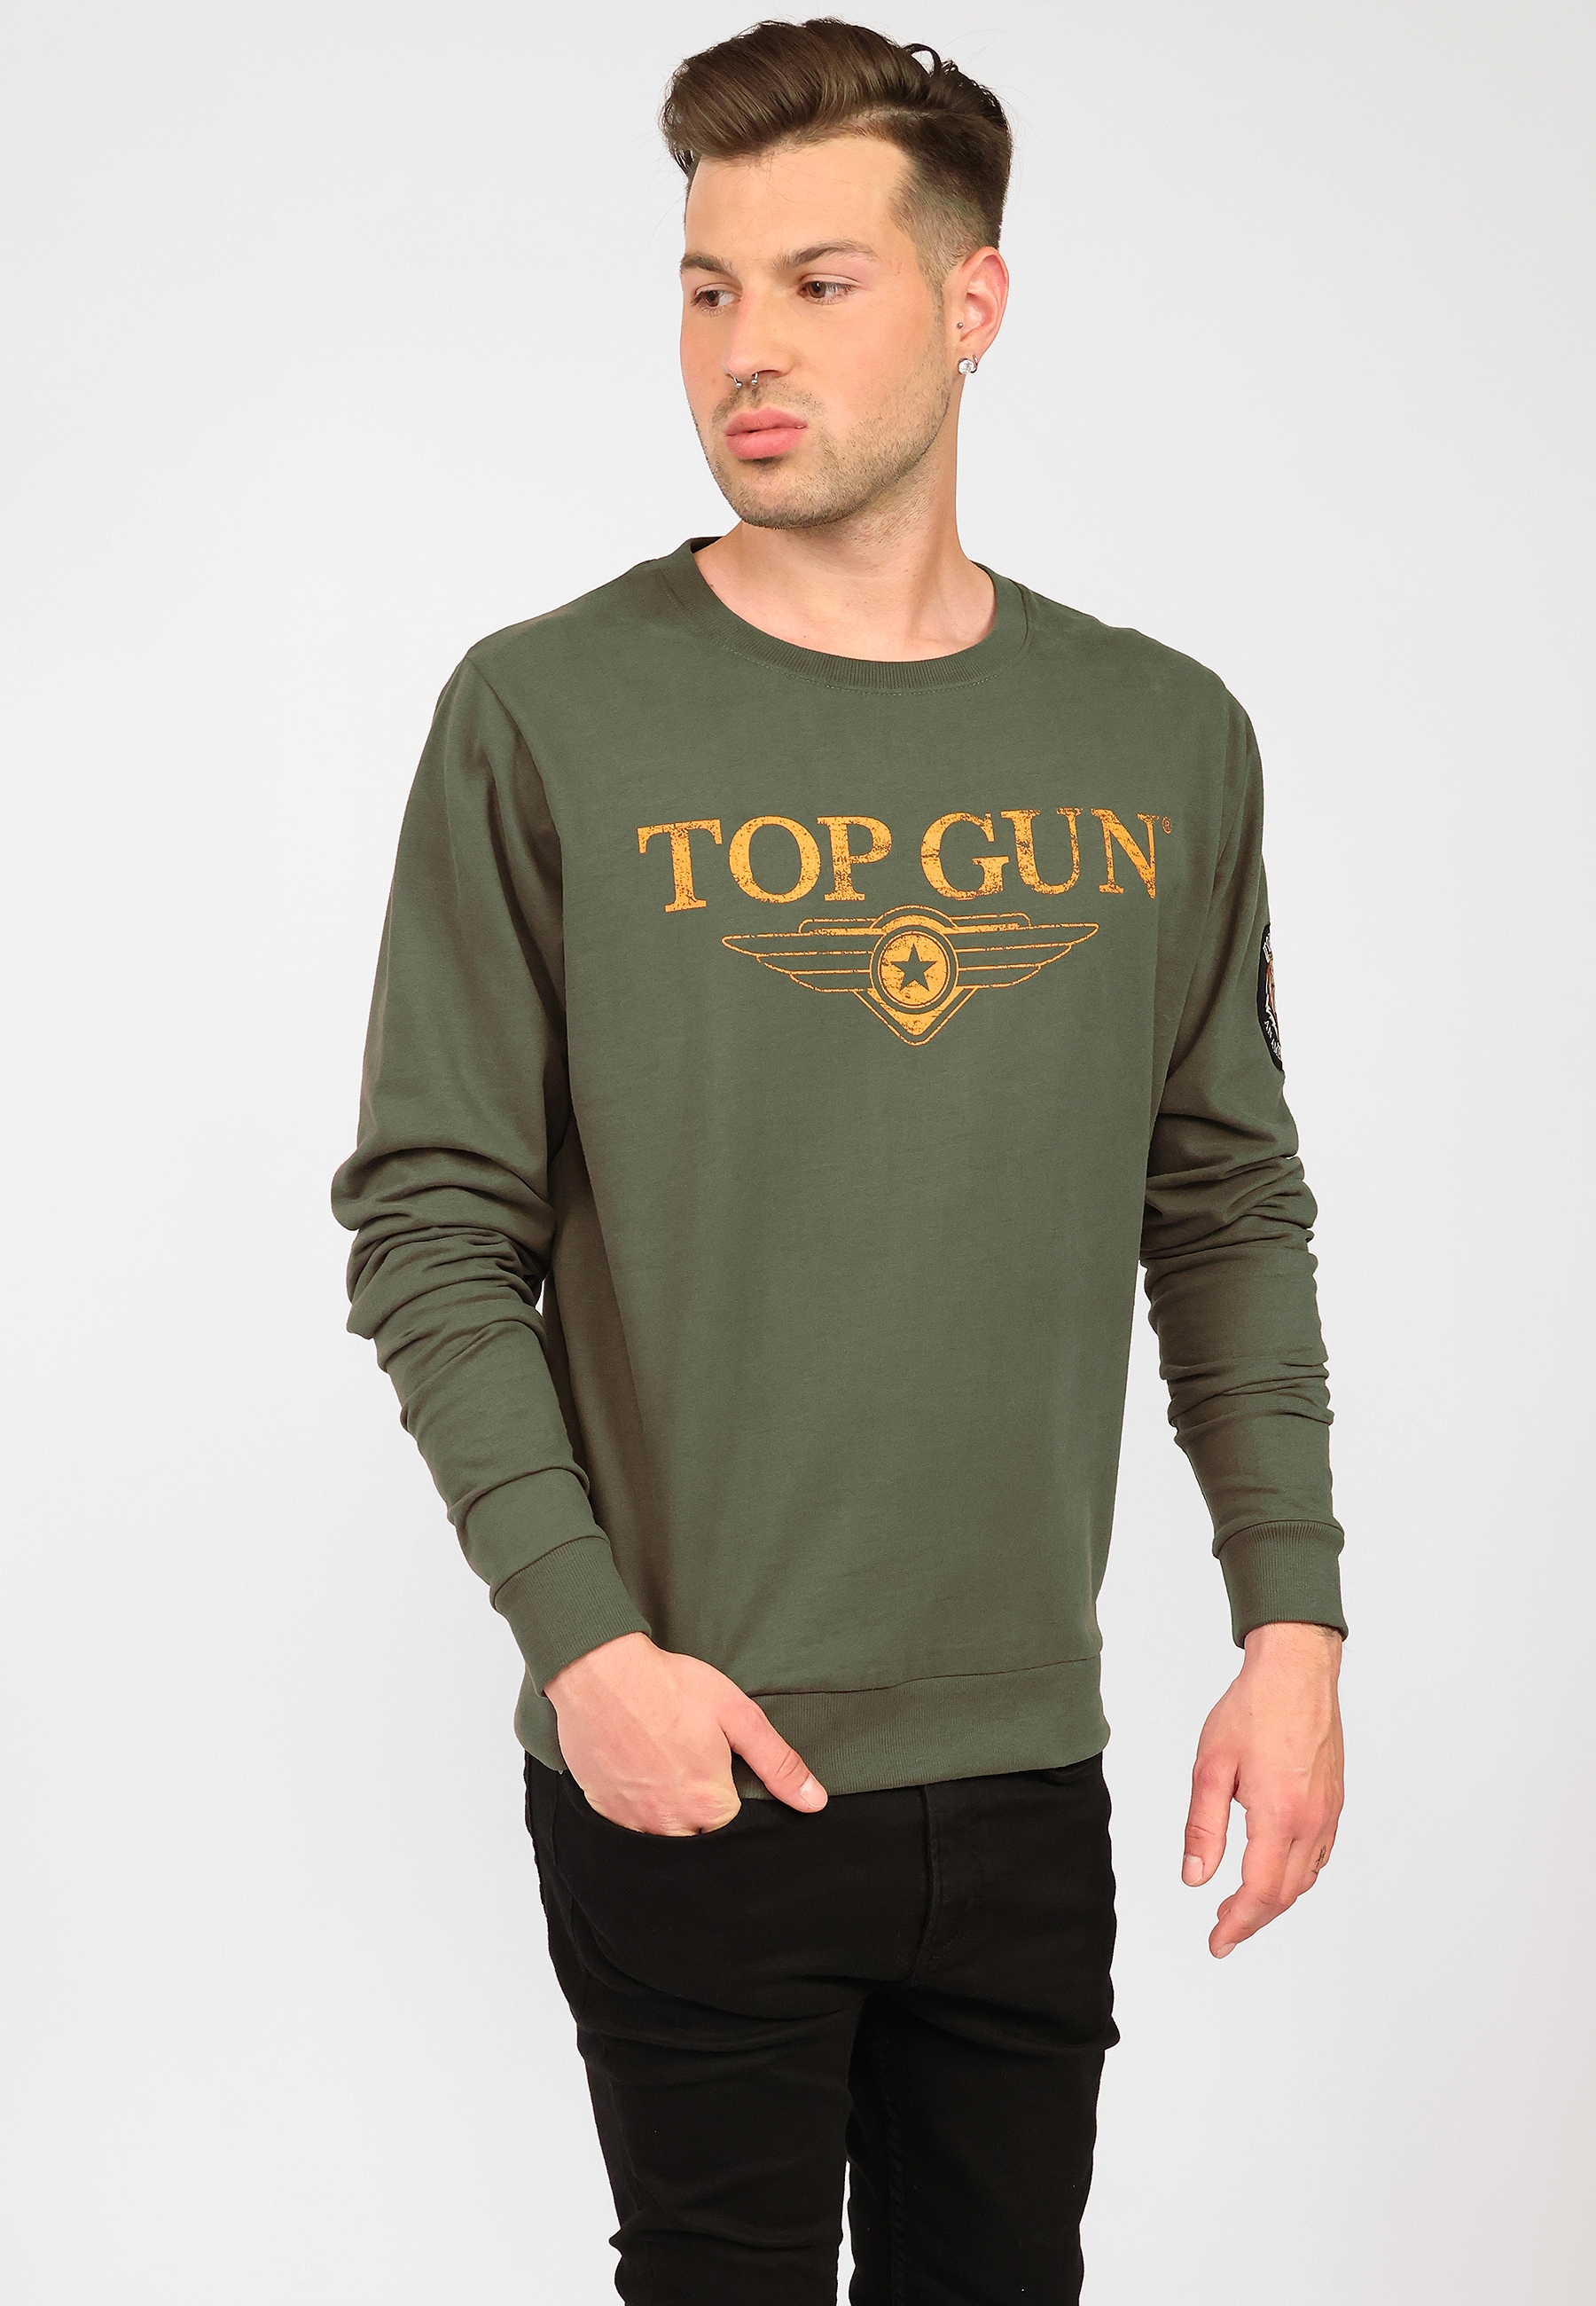 Black Friday »TG20213005« TOP BAUR | GUN Sweater